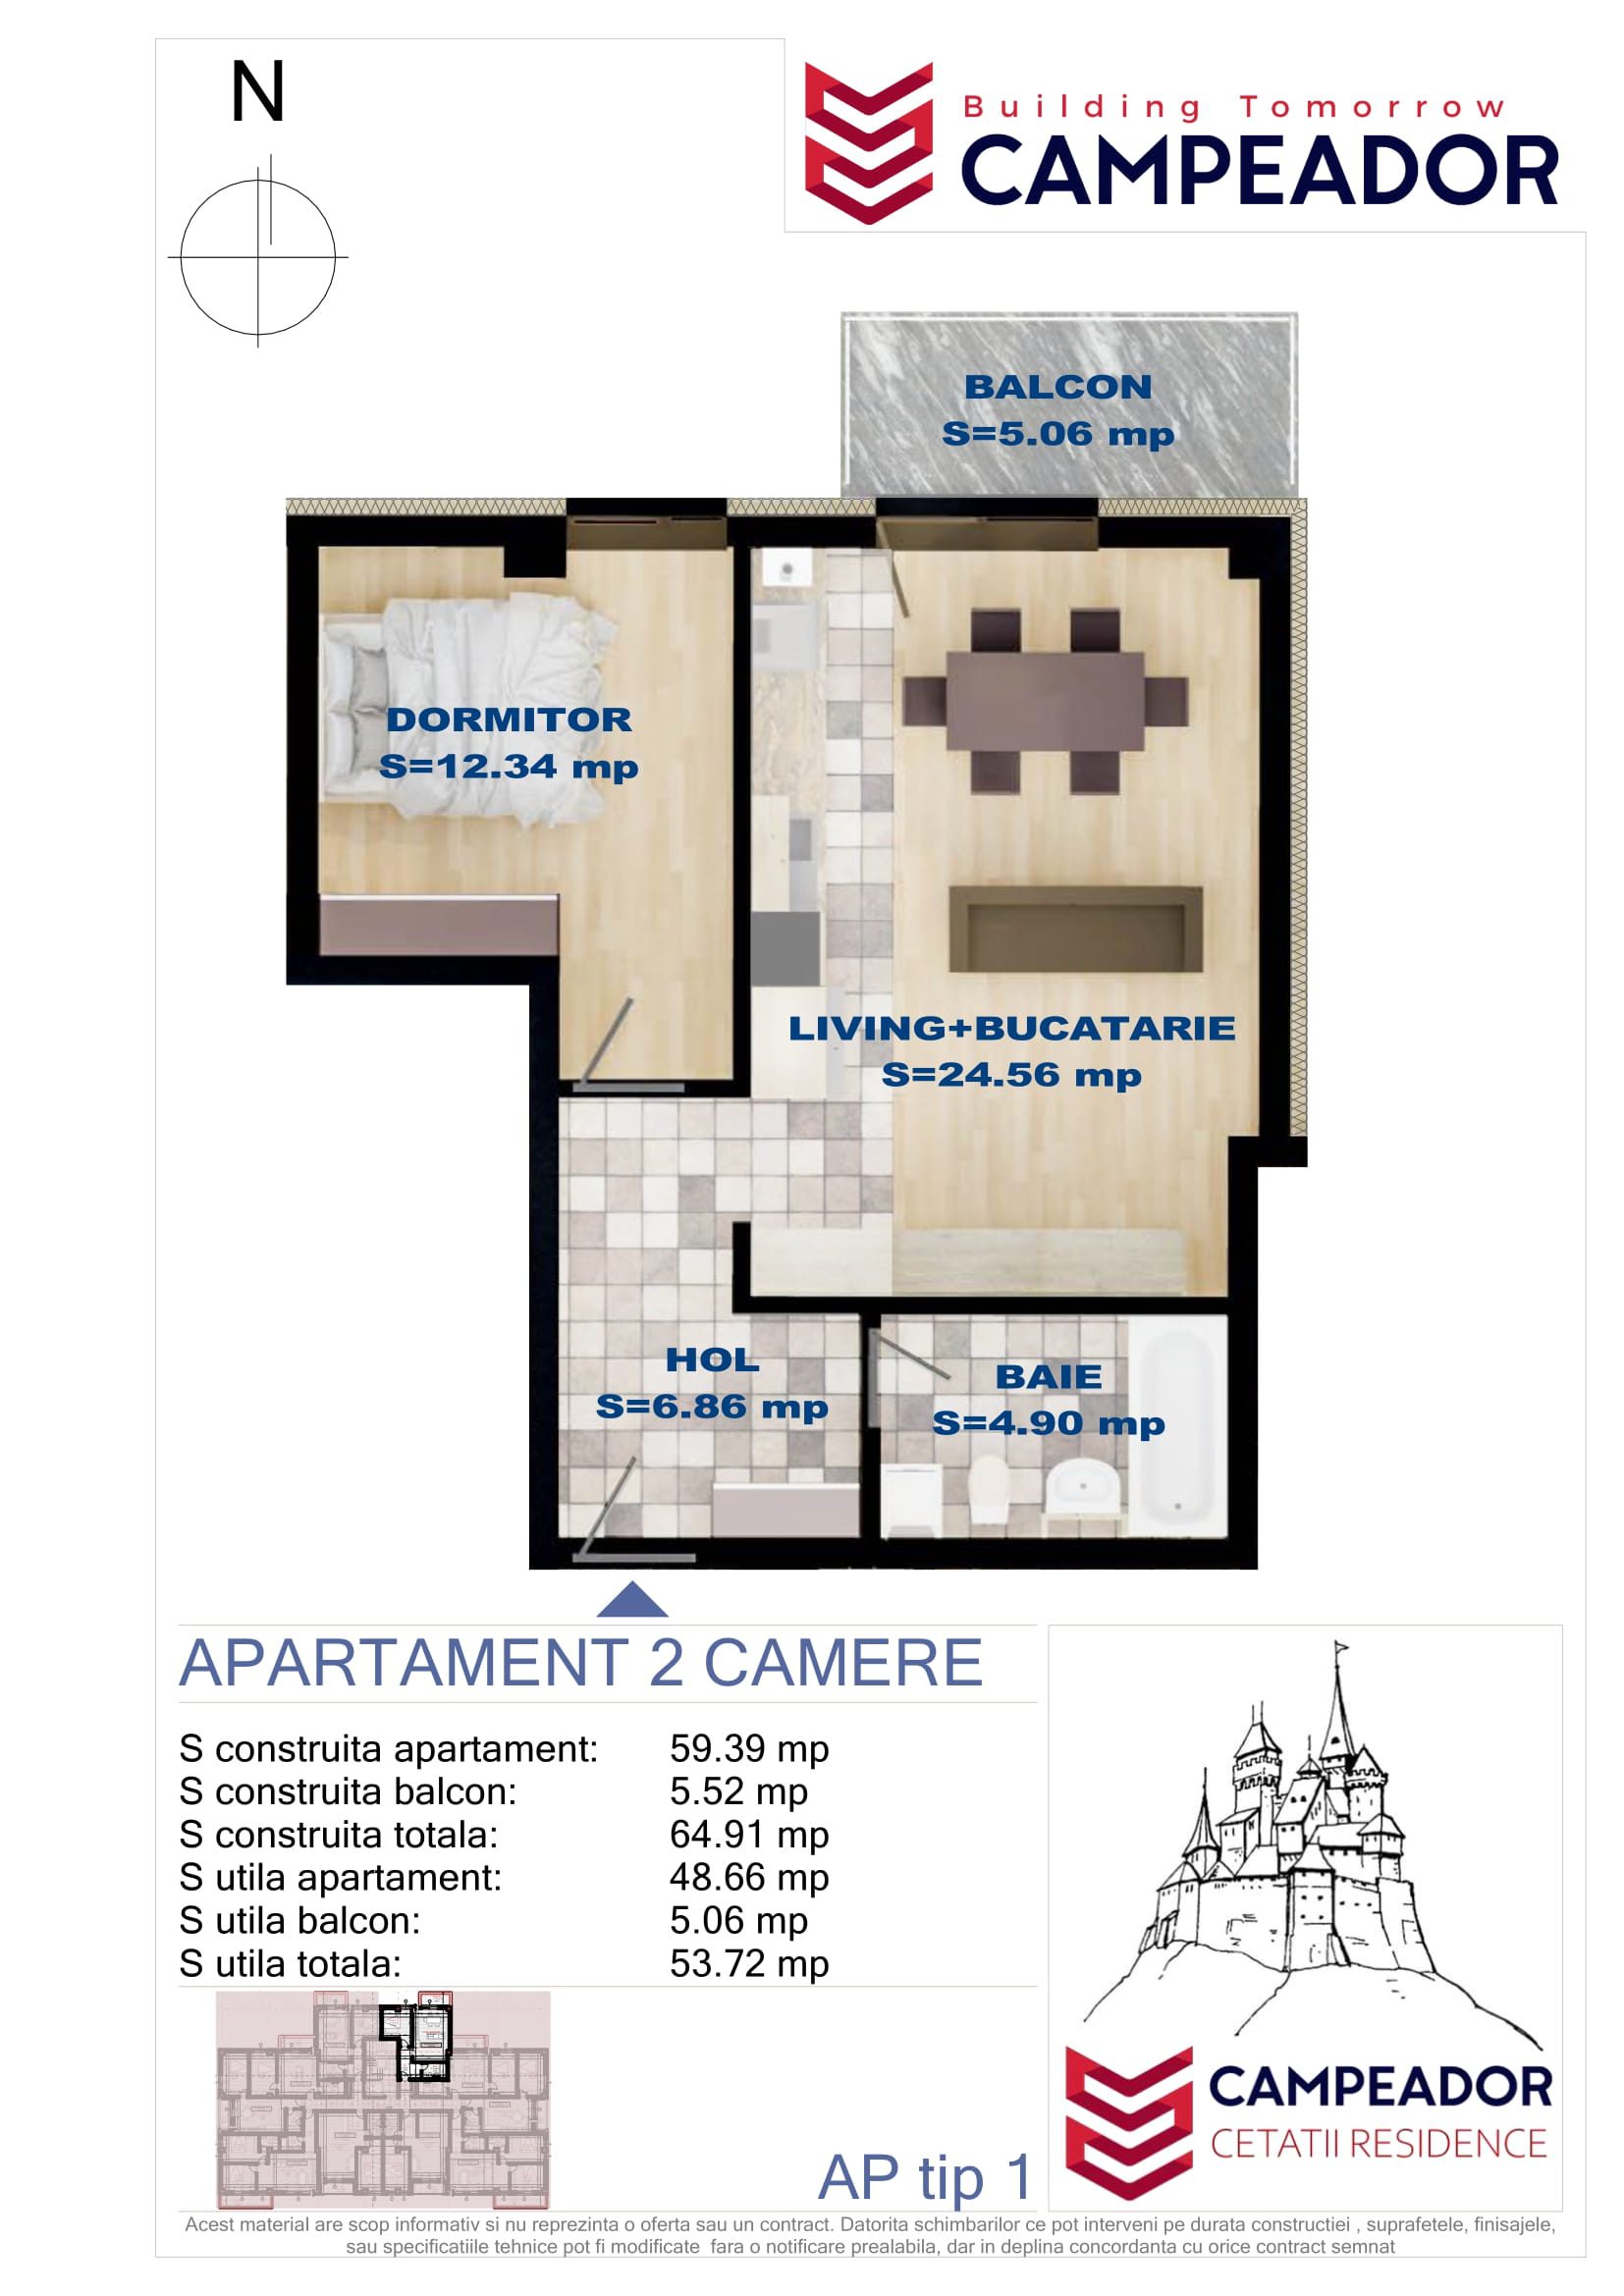 APARTAMENT TIP 1 - Campeador Cetatii Residence